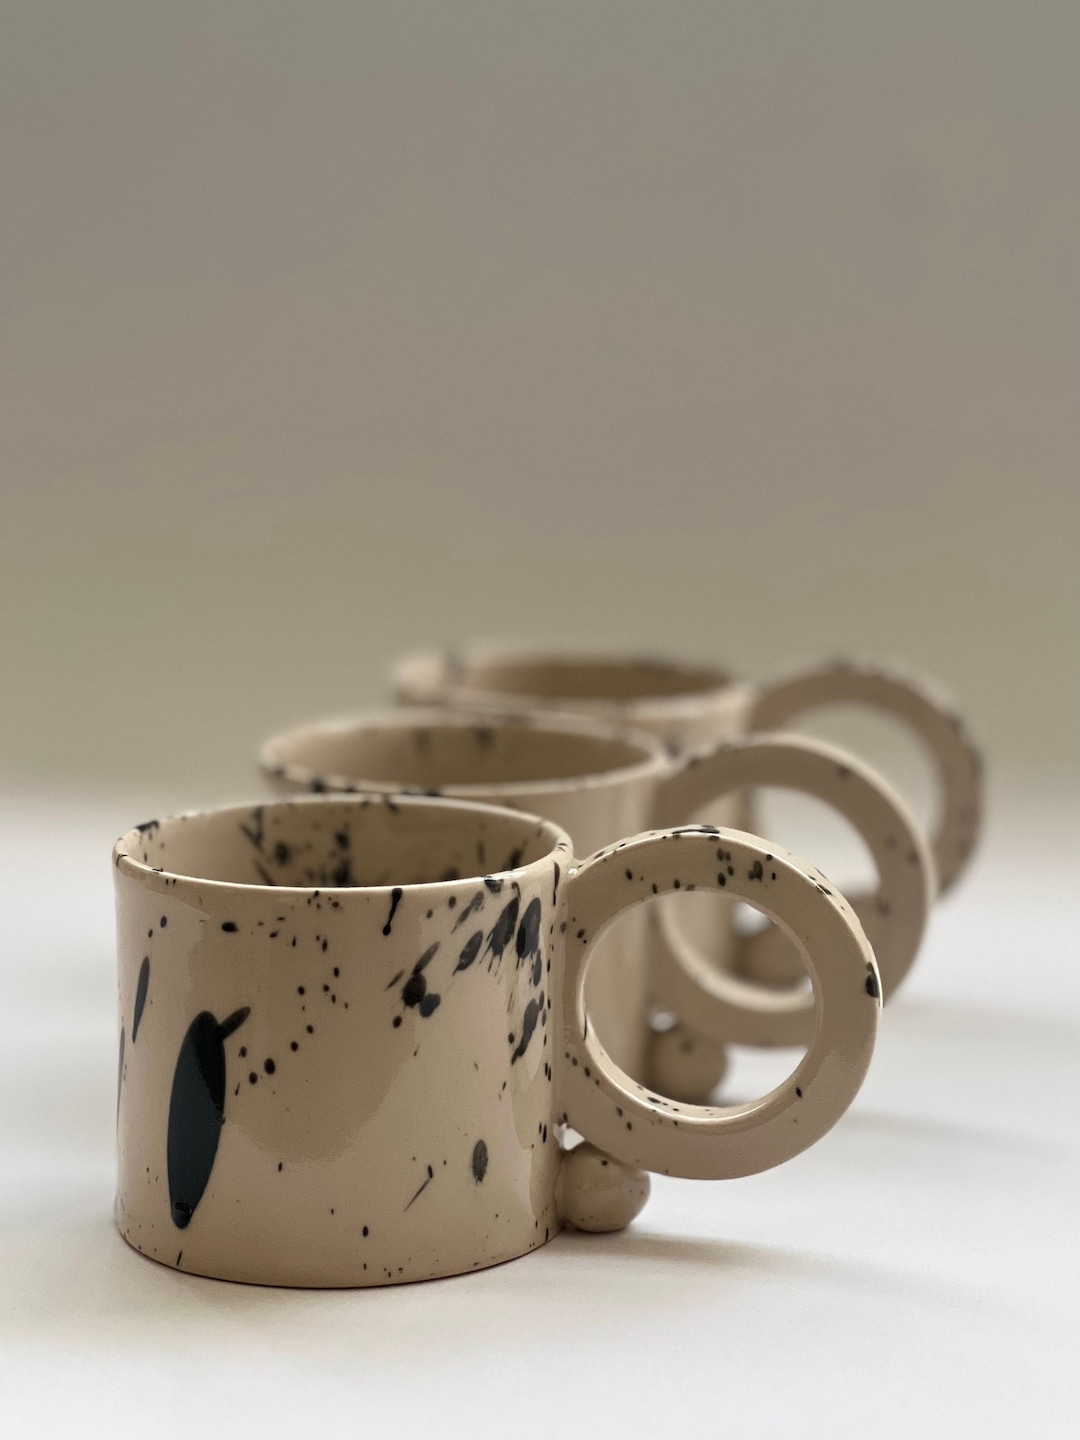 12 oz Handmade Ceramic Coffee Mug High-Capacity Modern-Style